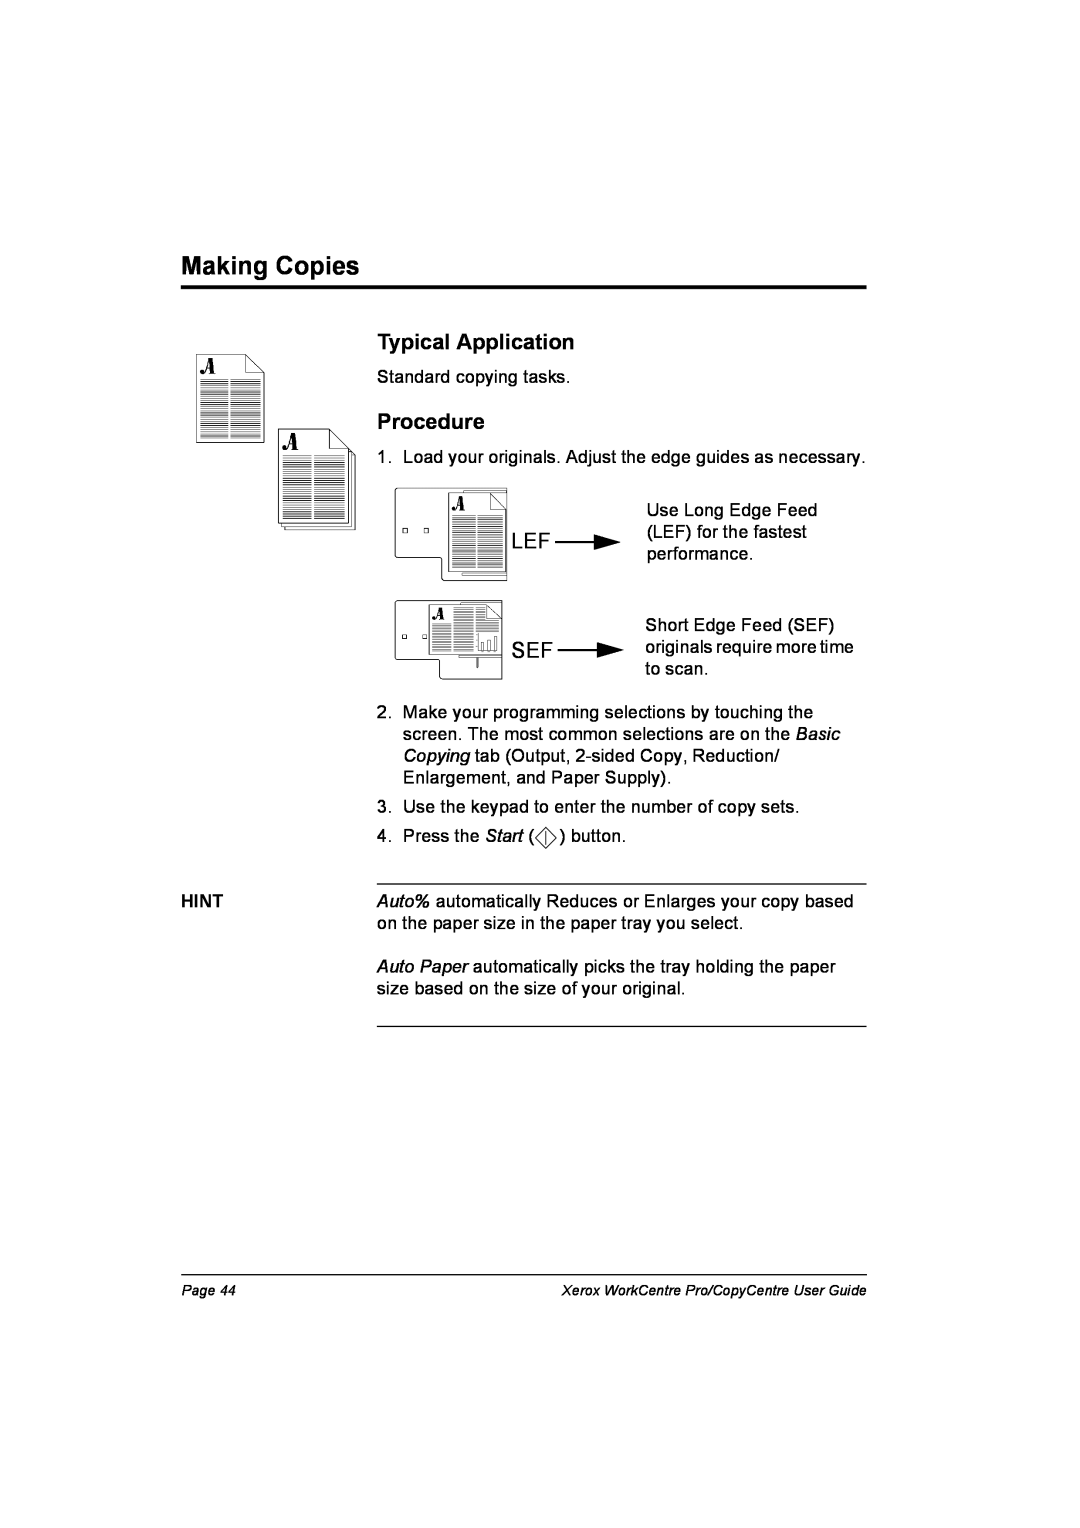 Xerox C65, C90, C75, WorkCentre Pro 75 manual Typical Application, Procedure, Lef Sef, Making Copies 